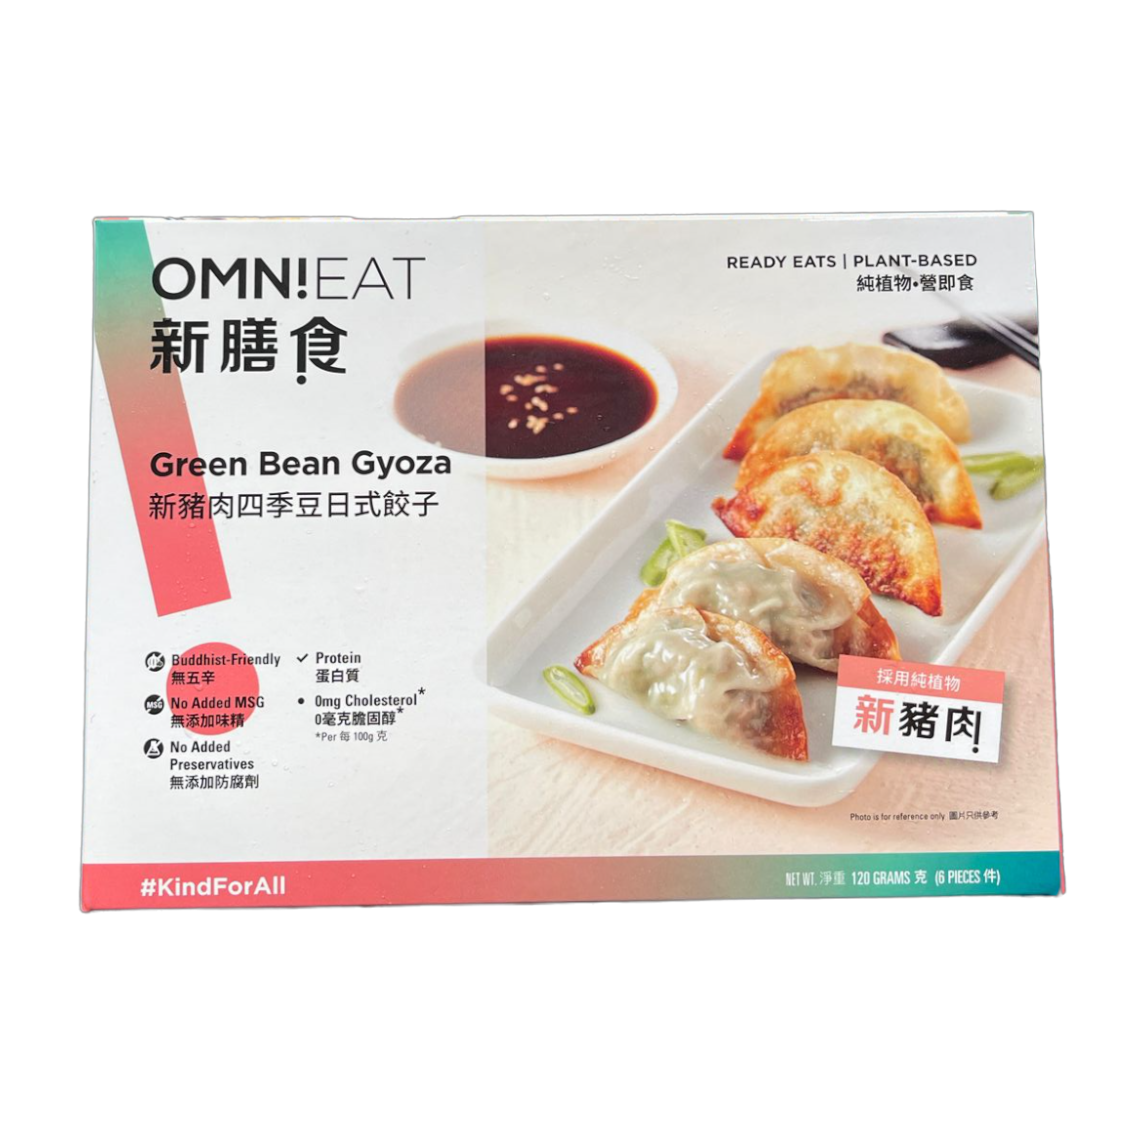 Image OmniEAT Green Bean Gyoza 新猪肉-四季豆饺子 120grams